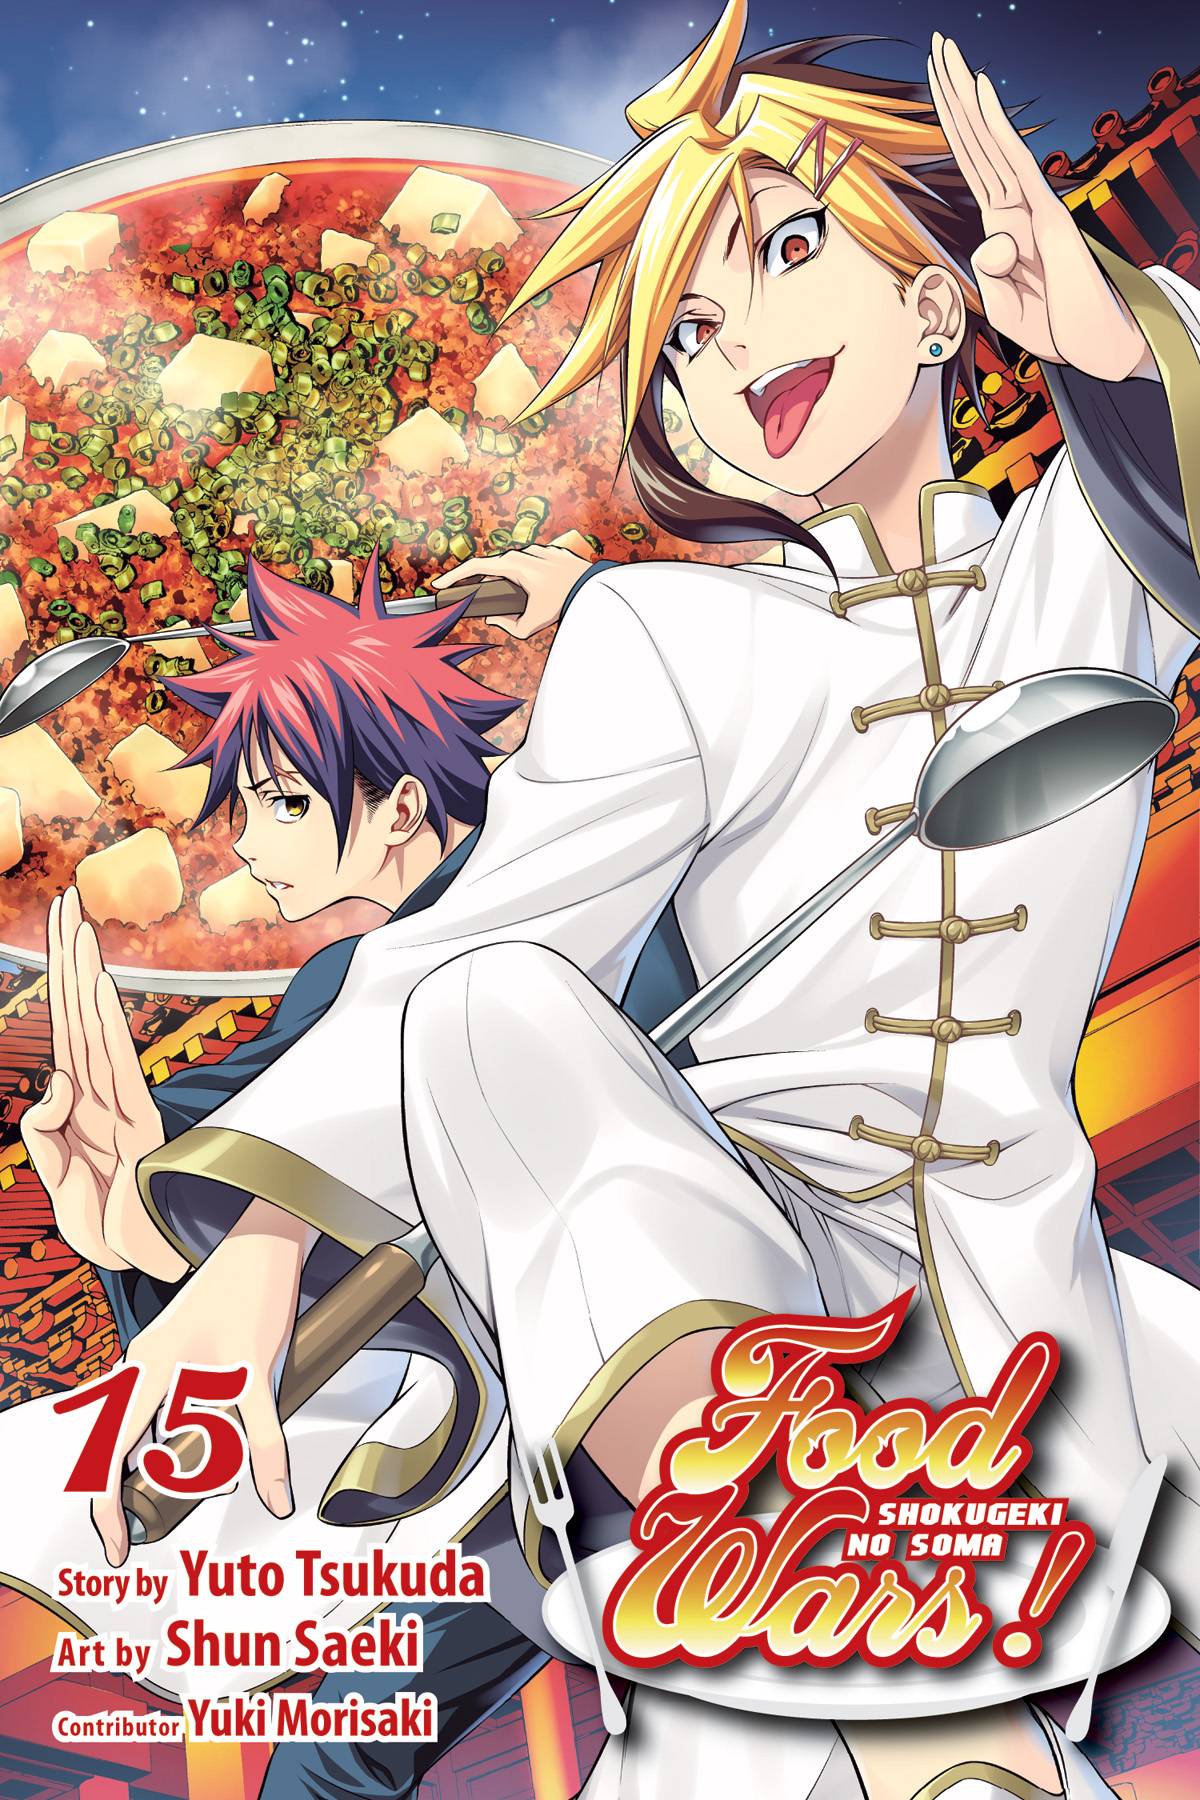 Food Wars Shokugeki No Soma Manga Volume 15